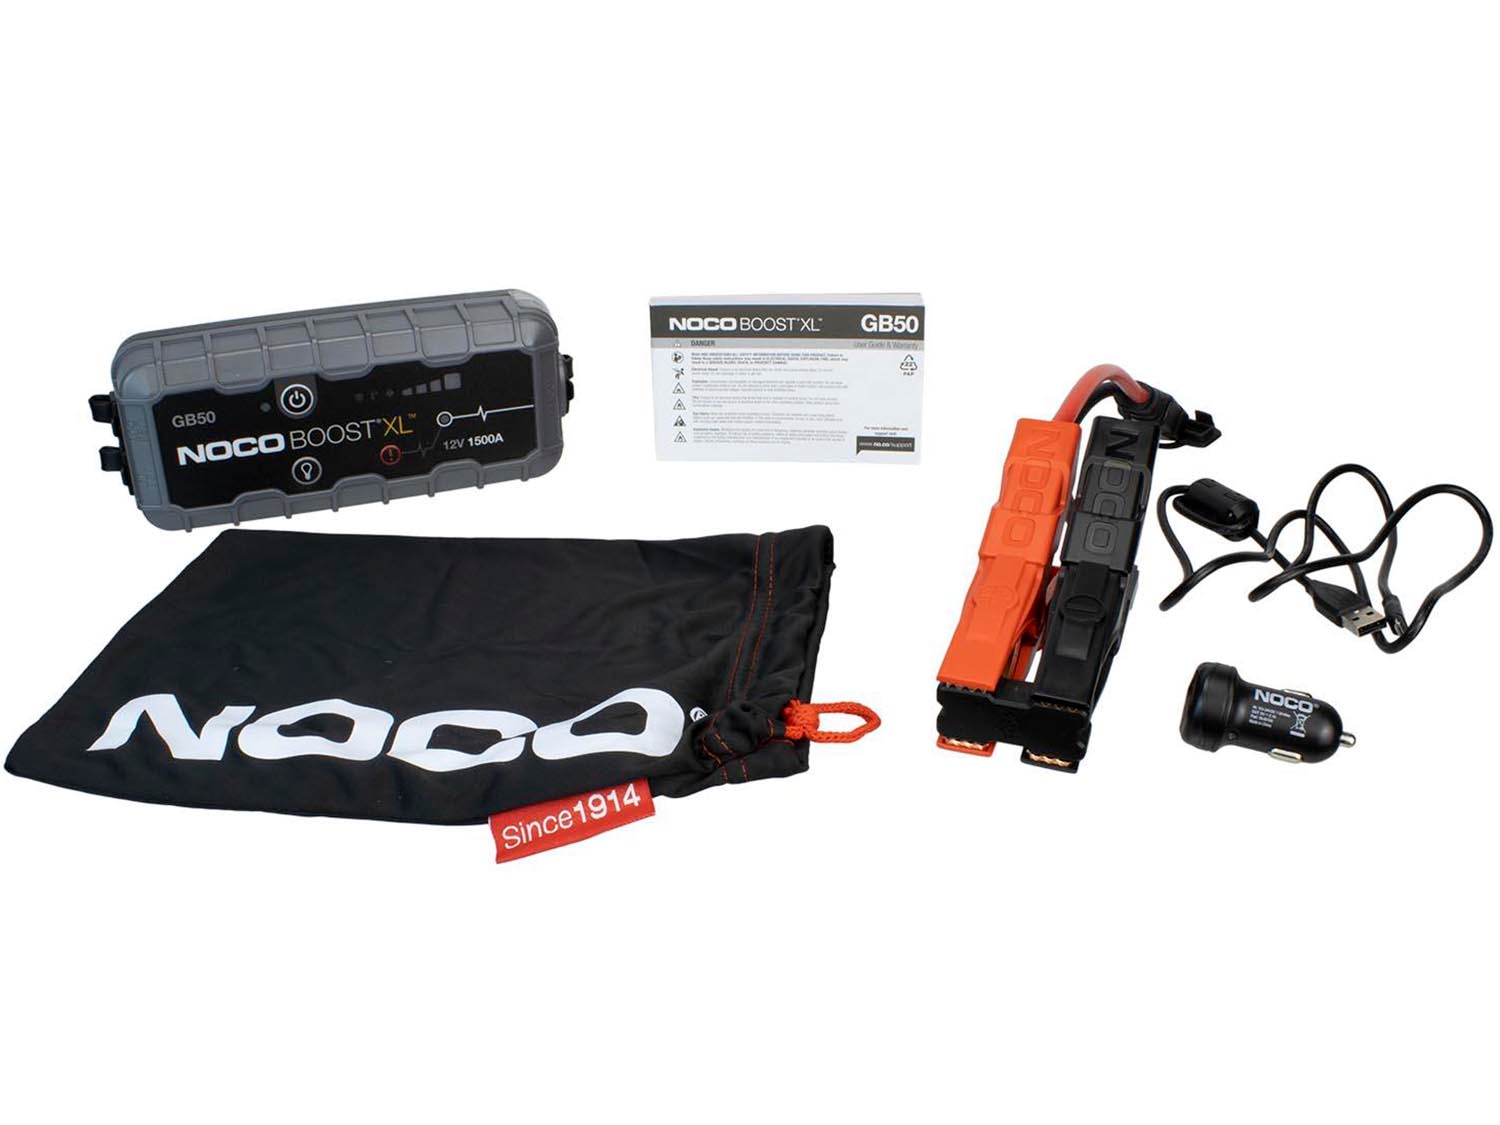 NOCO GB50 BOOST XL 12V 1500A UltraSafe Lithium Ion Portable Jump Starter